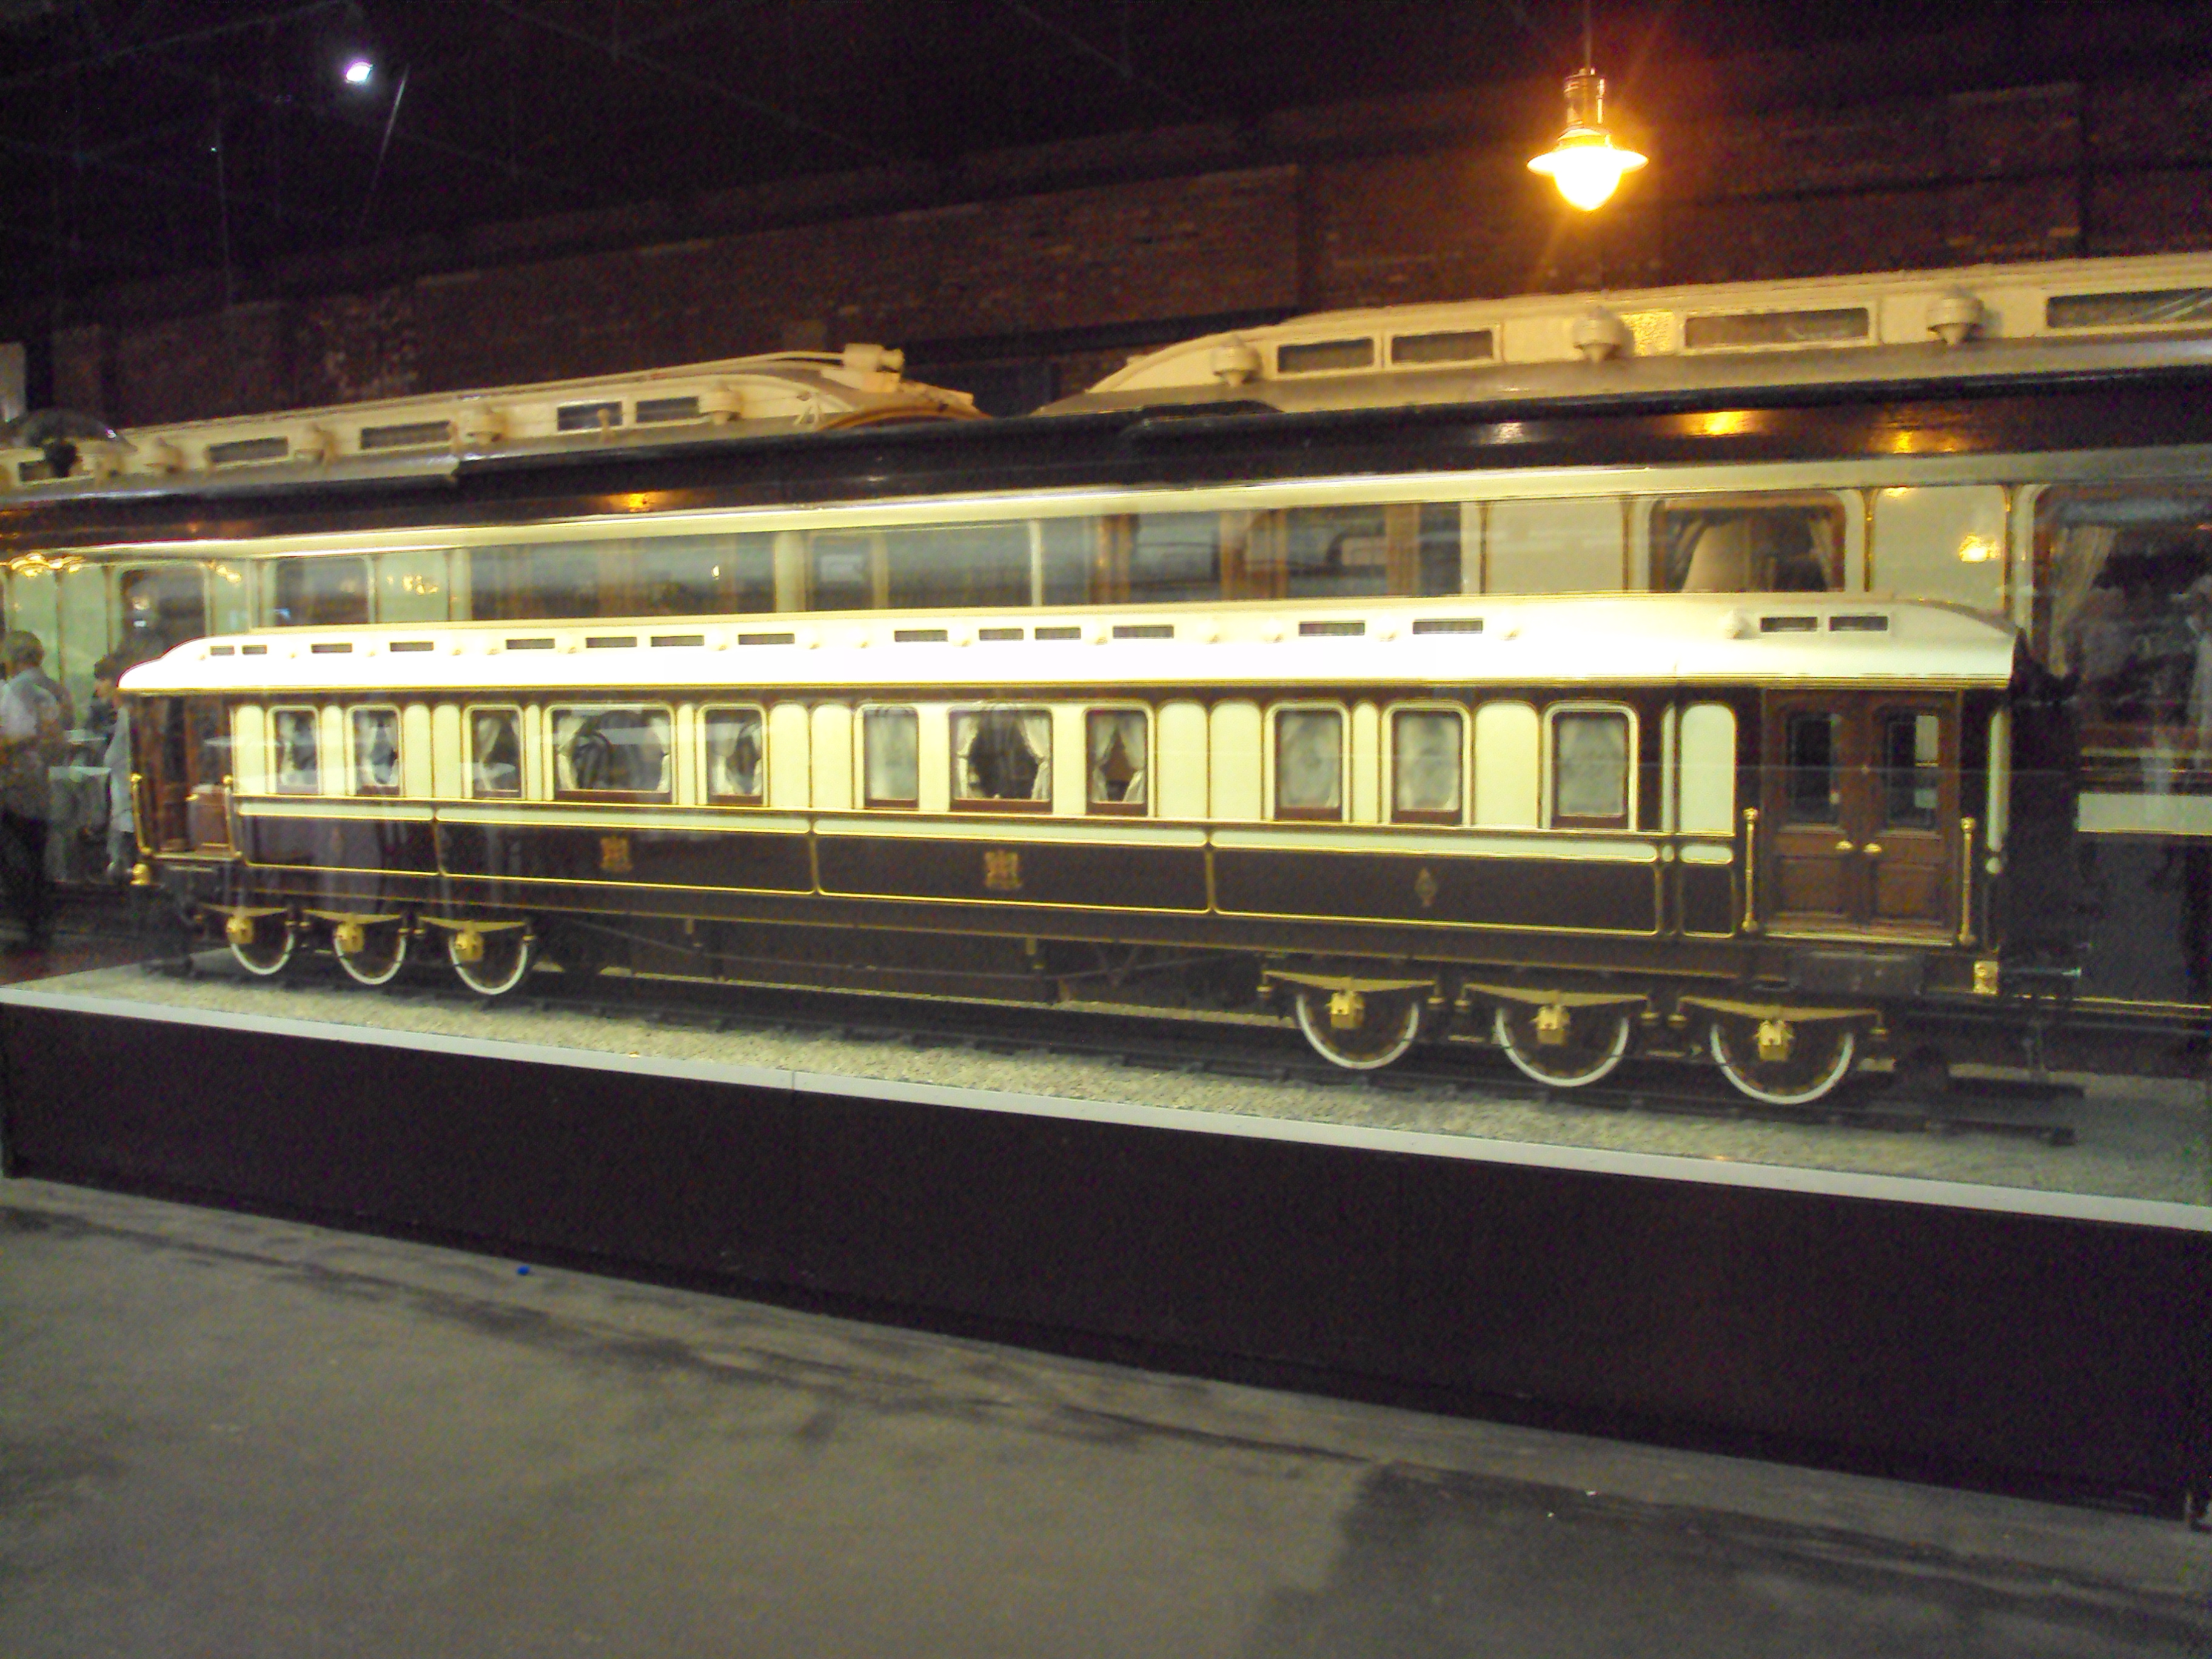 File:Model royal train carriage at NRM York - DSC07841.JPG ...